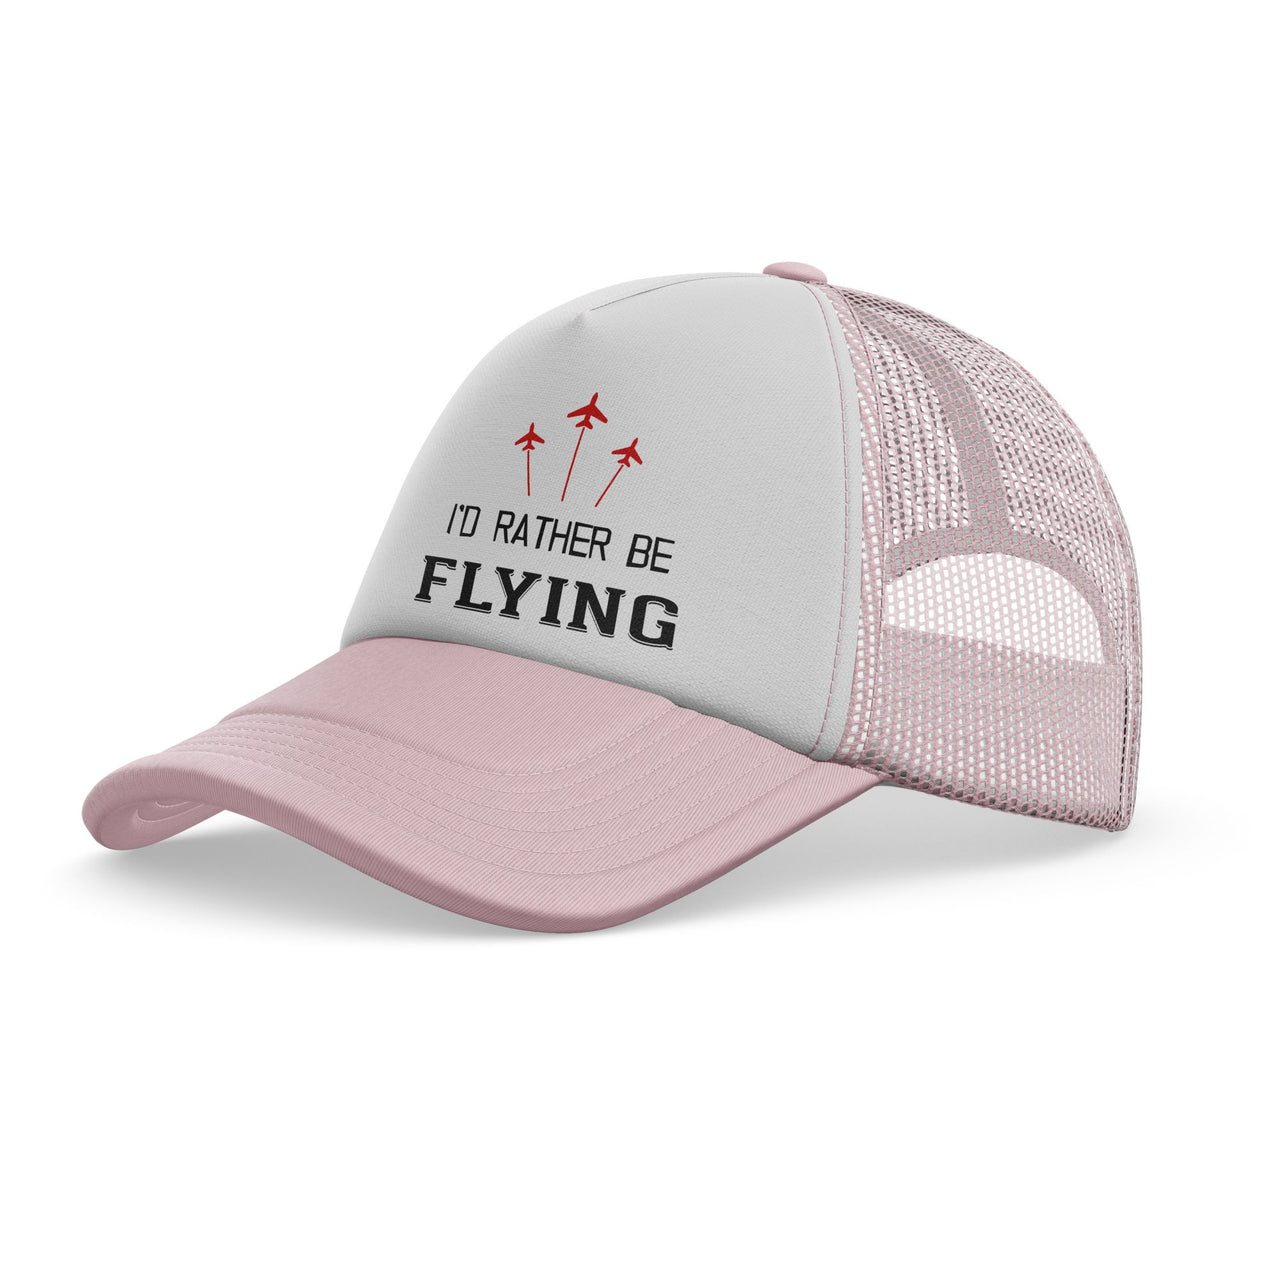 I'D Rather Be Flying Designed Trucker Caps & Hats